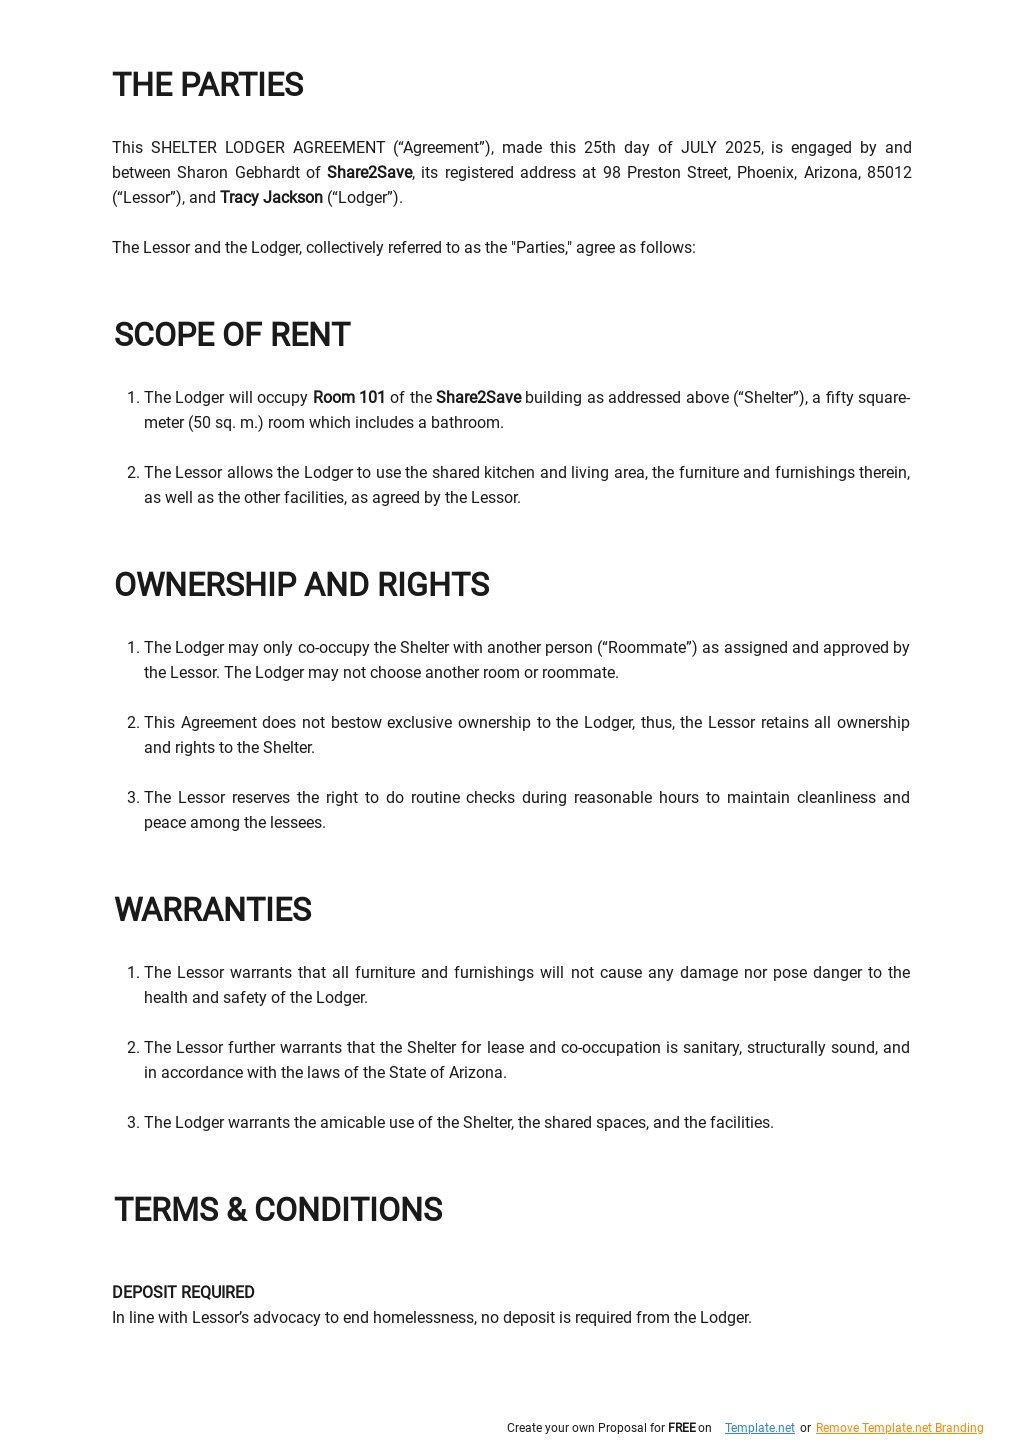 Shelter Lodger Agreement Template - Google Docs, Word  Template.net Regarding landlord lodger agreement template